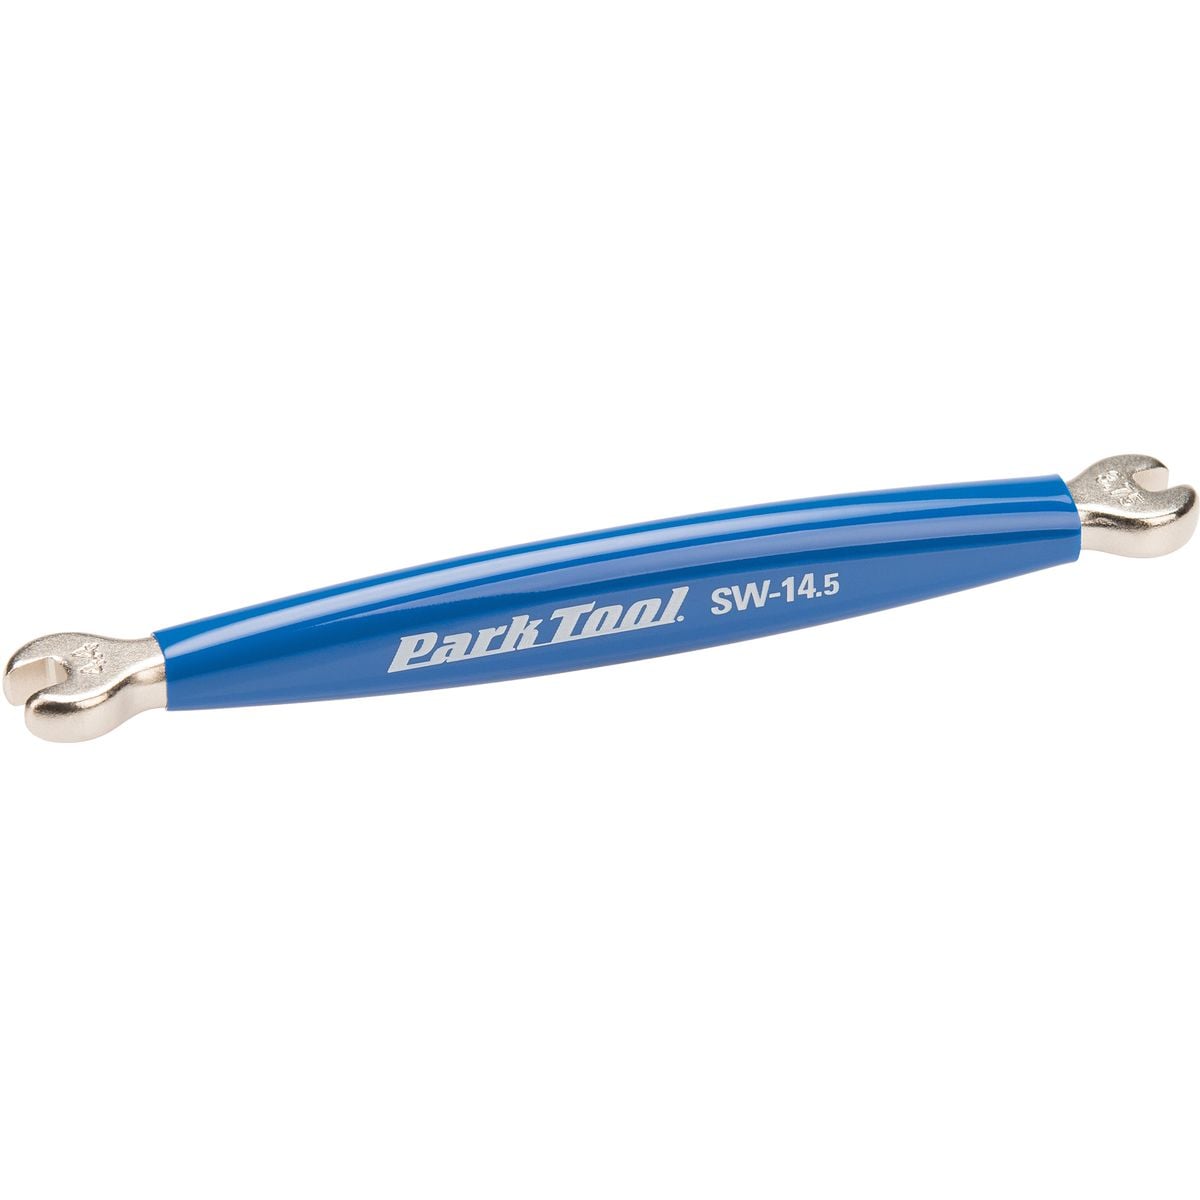 Sw-14.5 спицеевый ключ shimano wheel systems Park Tool, синий цена и фото